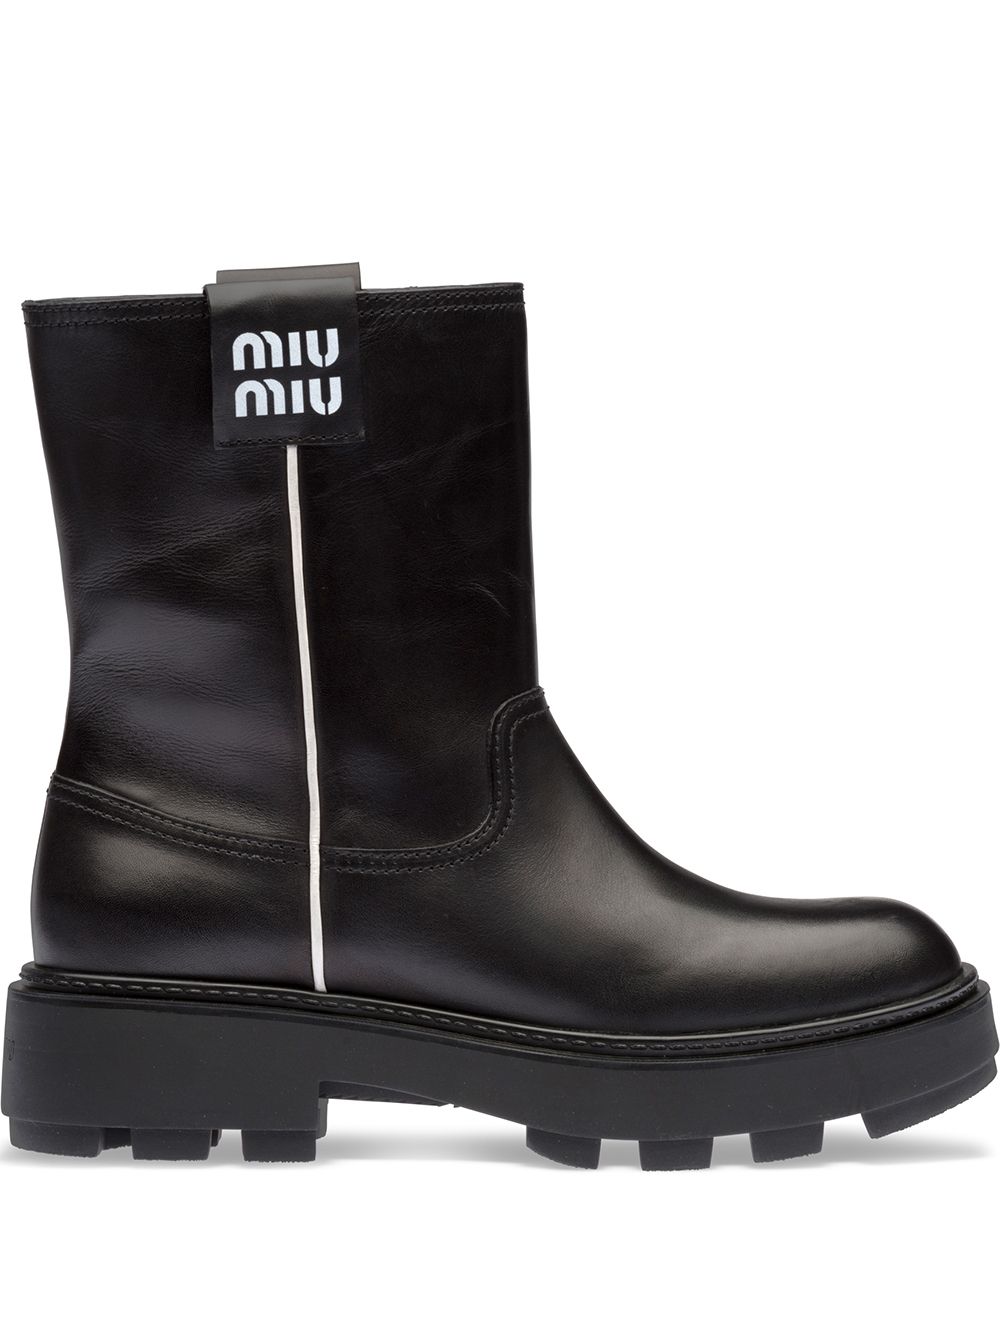 Logo Rain Boots дамски обувки Miu Miu 847709920_36